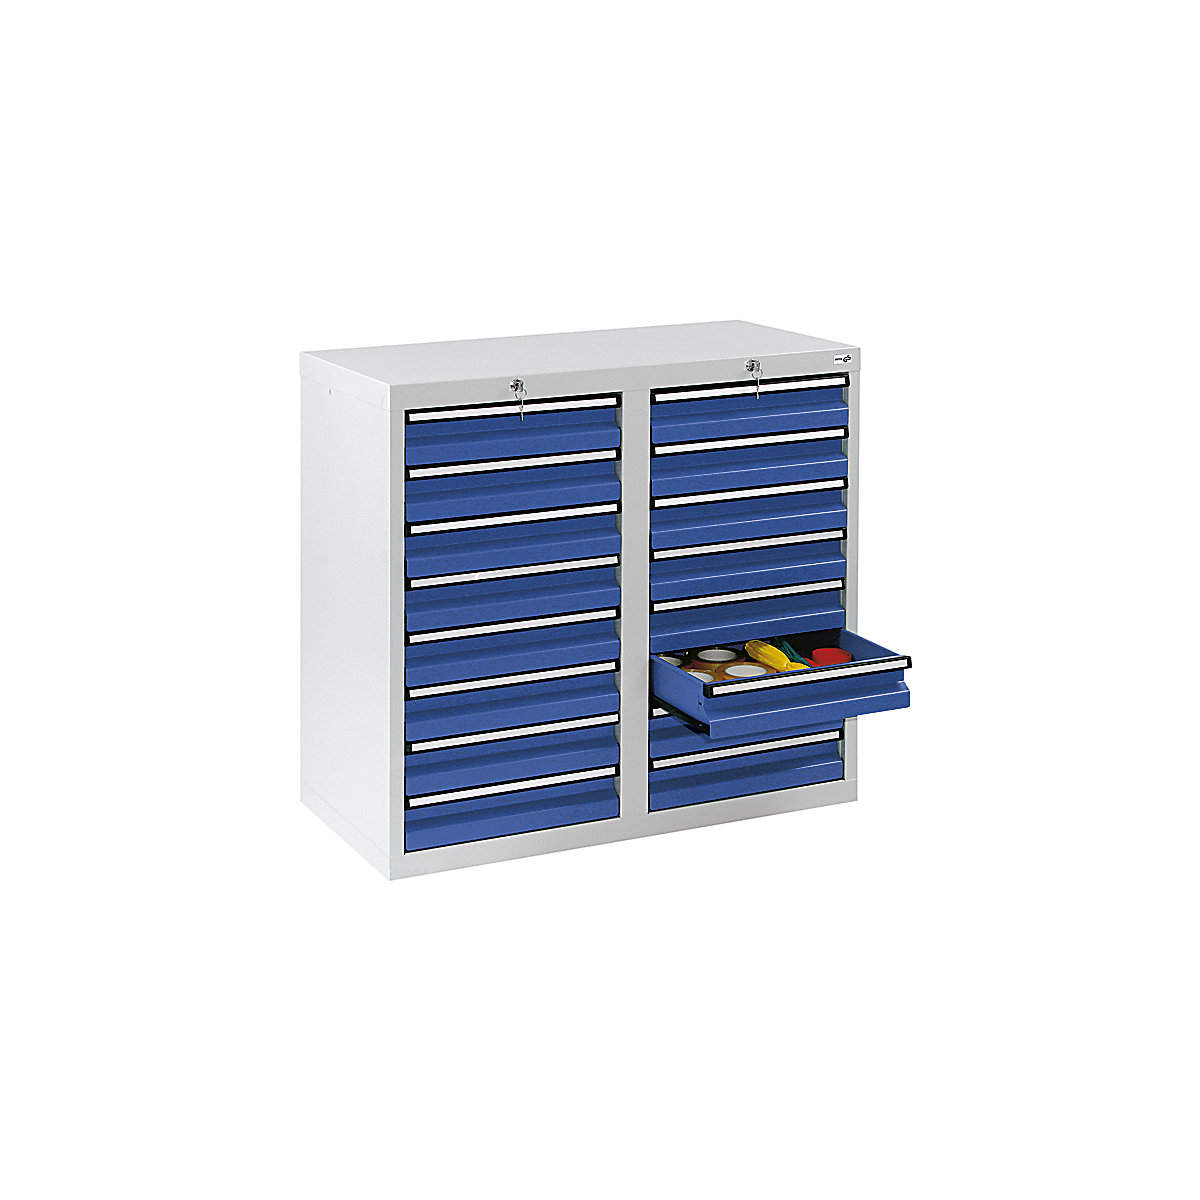 Zásuvková skříň, v x š x h 900 x 1000 x 500 mm, 16 zásuvek 100 mm vysokých, korpus šedý, zásuvky hořcově modré-8